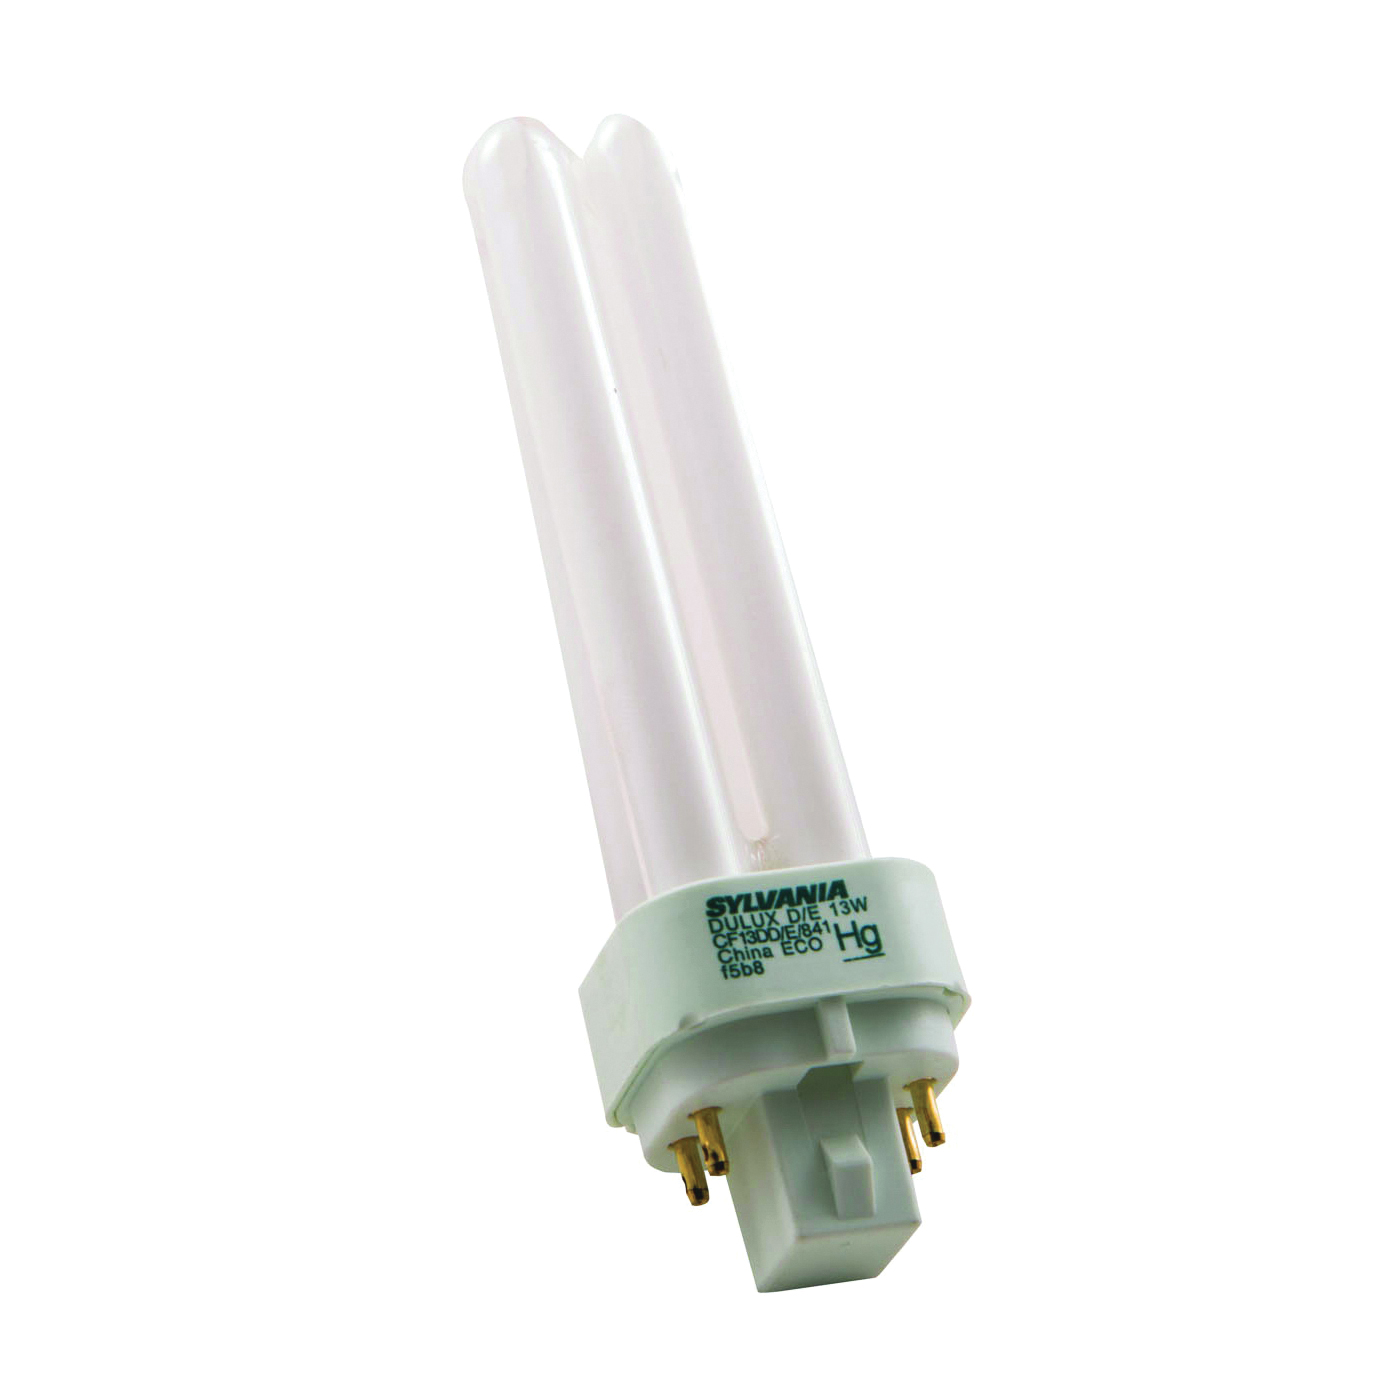 20667 Compact Fluorescent Bulb, 13 W, T4 Lamp, G24Q-1 Lamp Base, 900 Lumens, 4100 K Color Temp